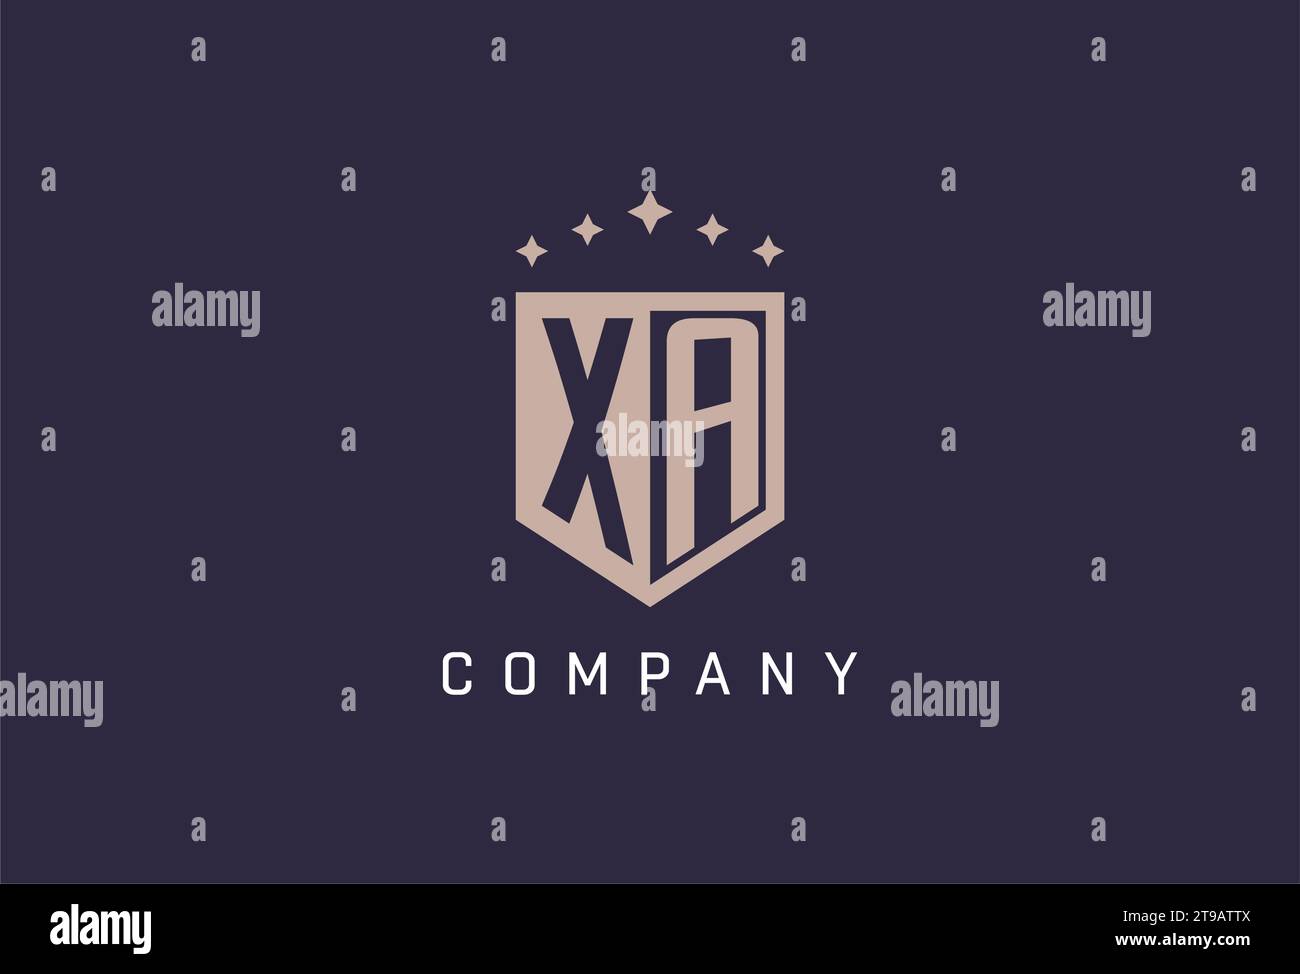 XA initial shield logo icon geometric style design inspiration Stock Vector